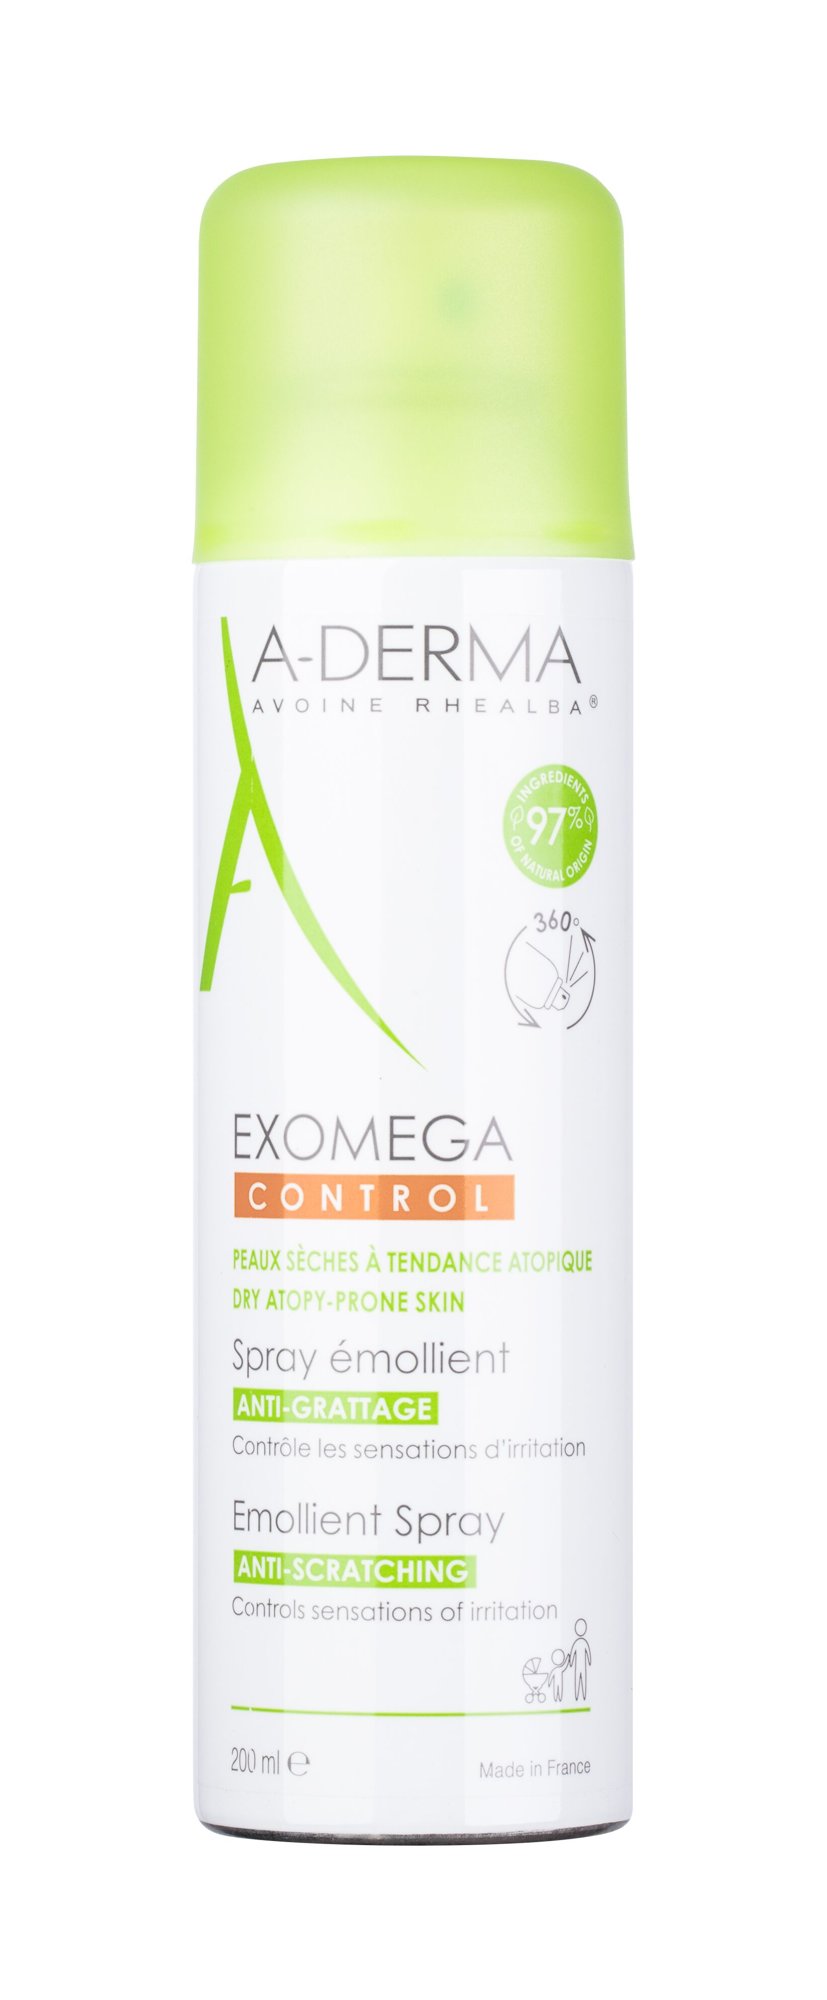 A-Derma Exomega Control Emollient Spray veido losjonas